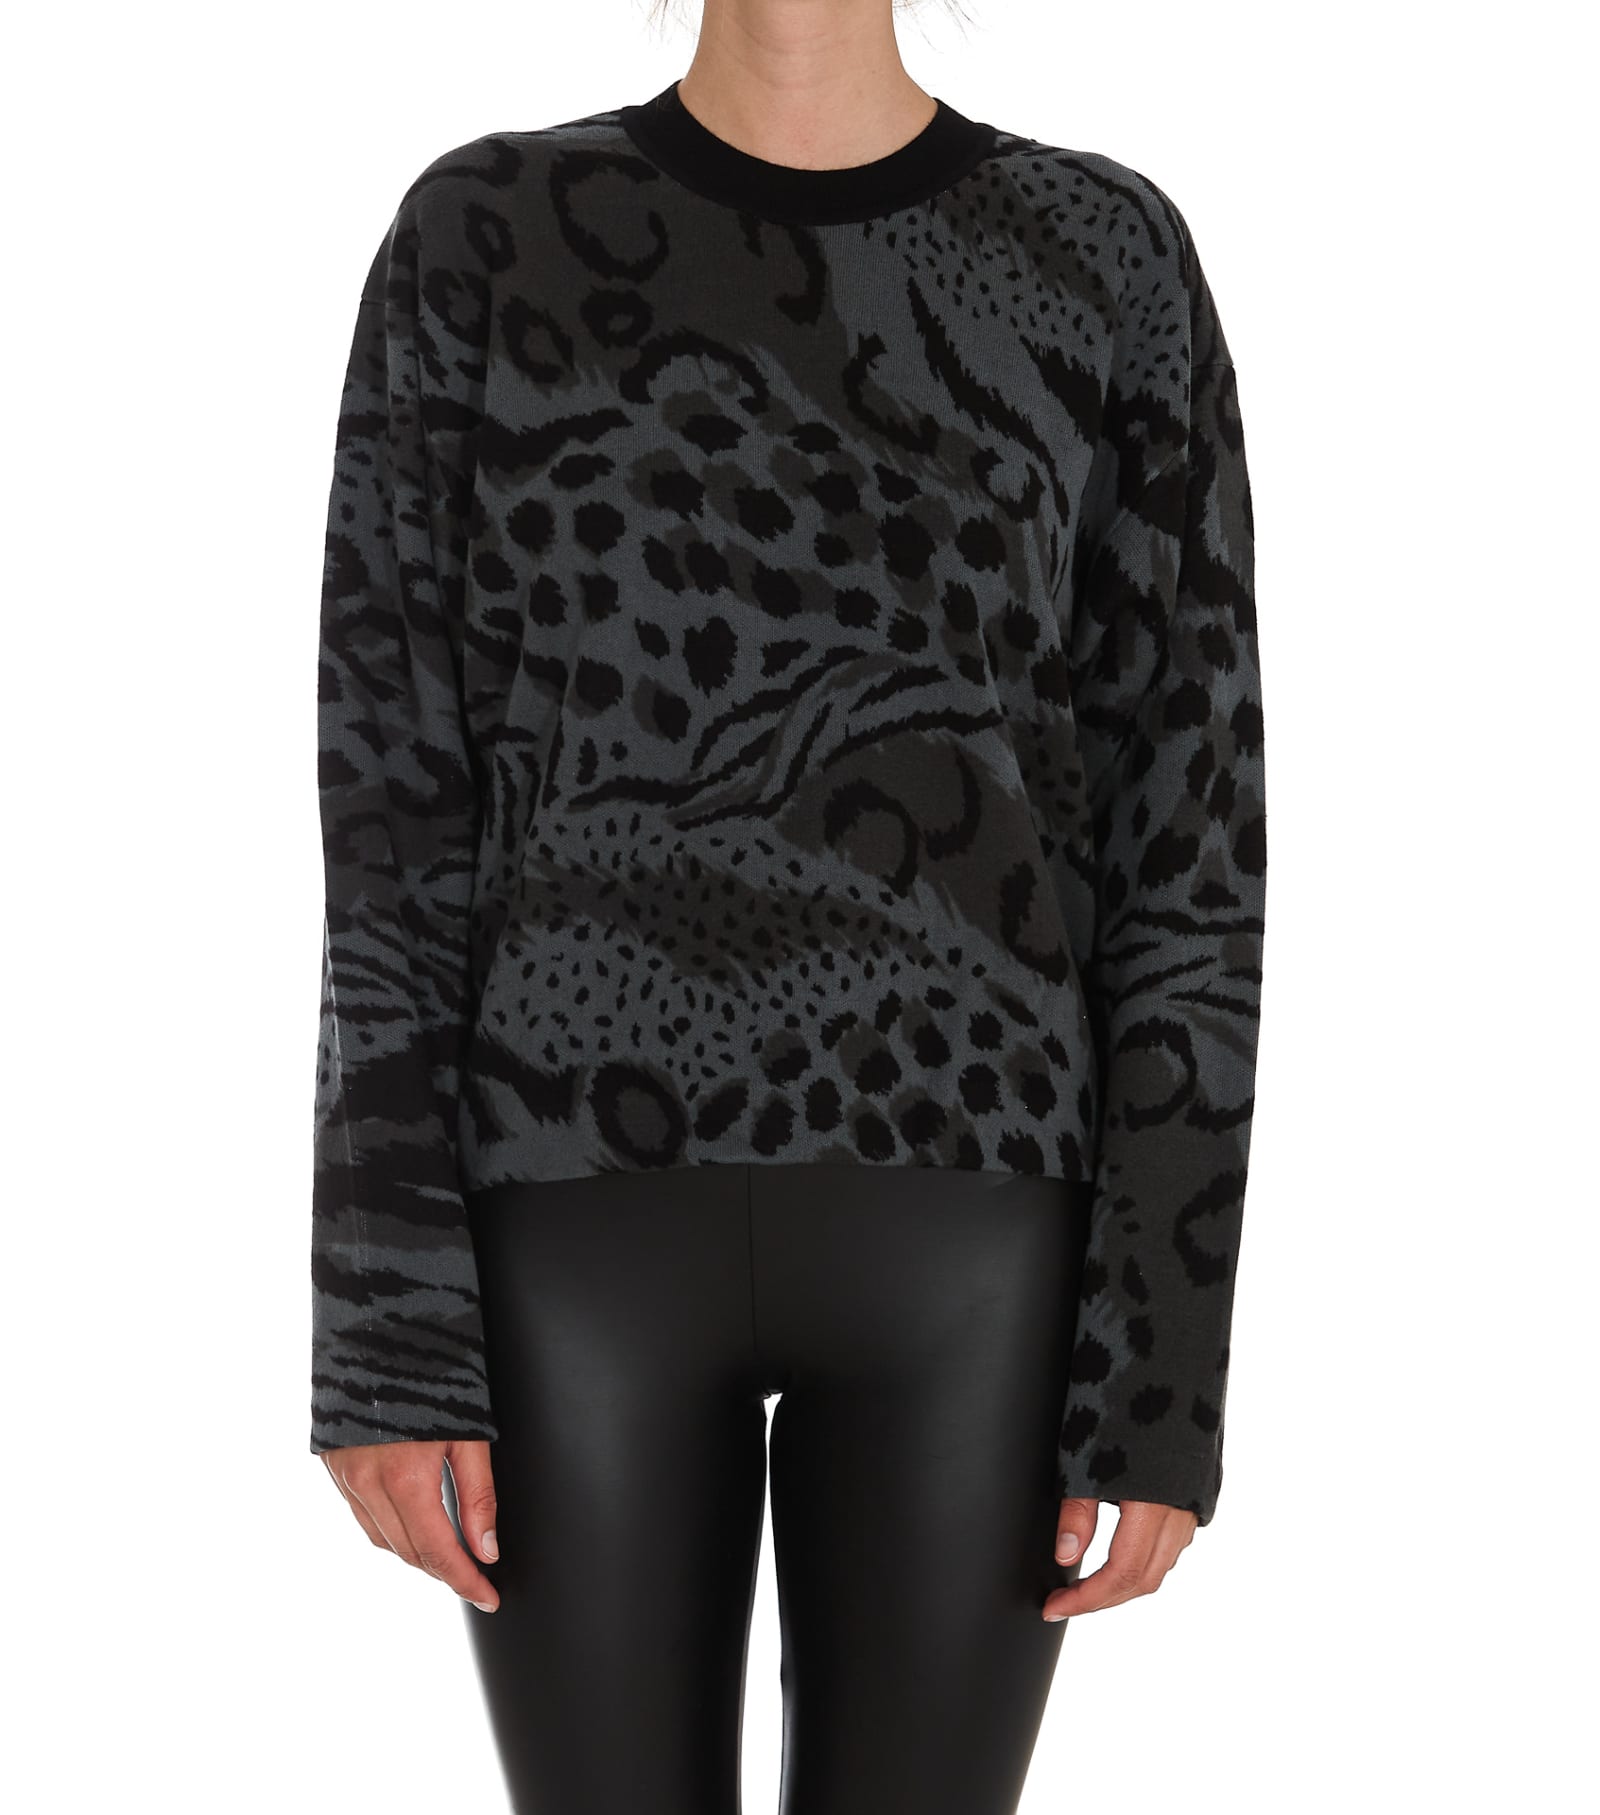 Kenzo Cheetah Leopard Sweater